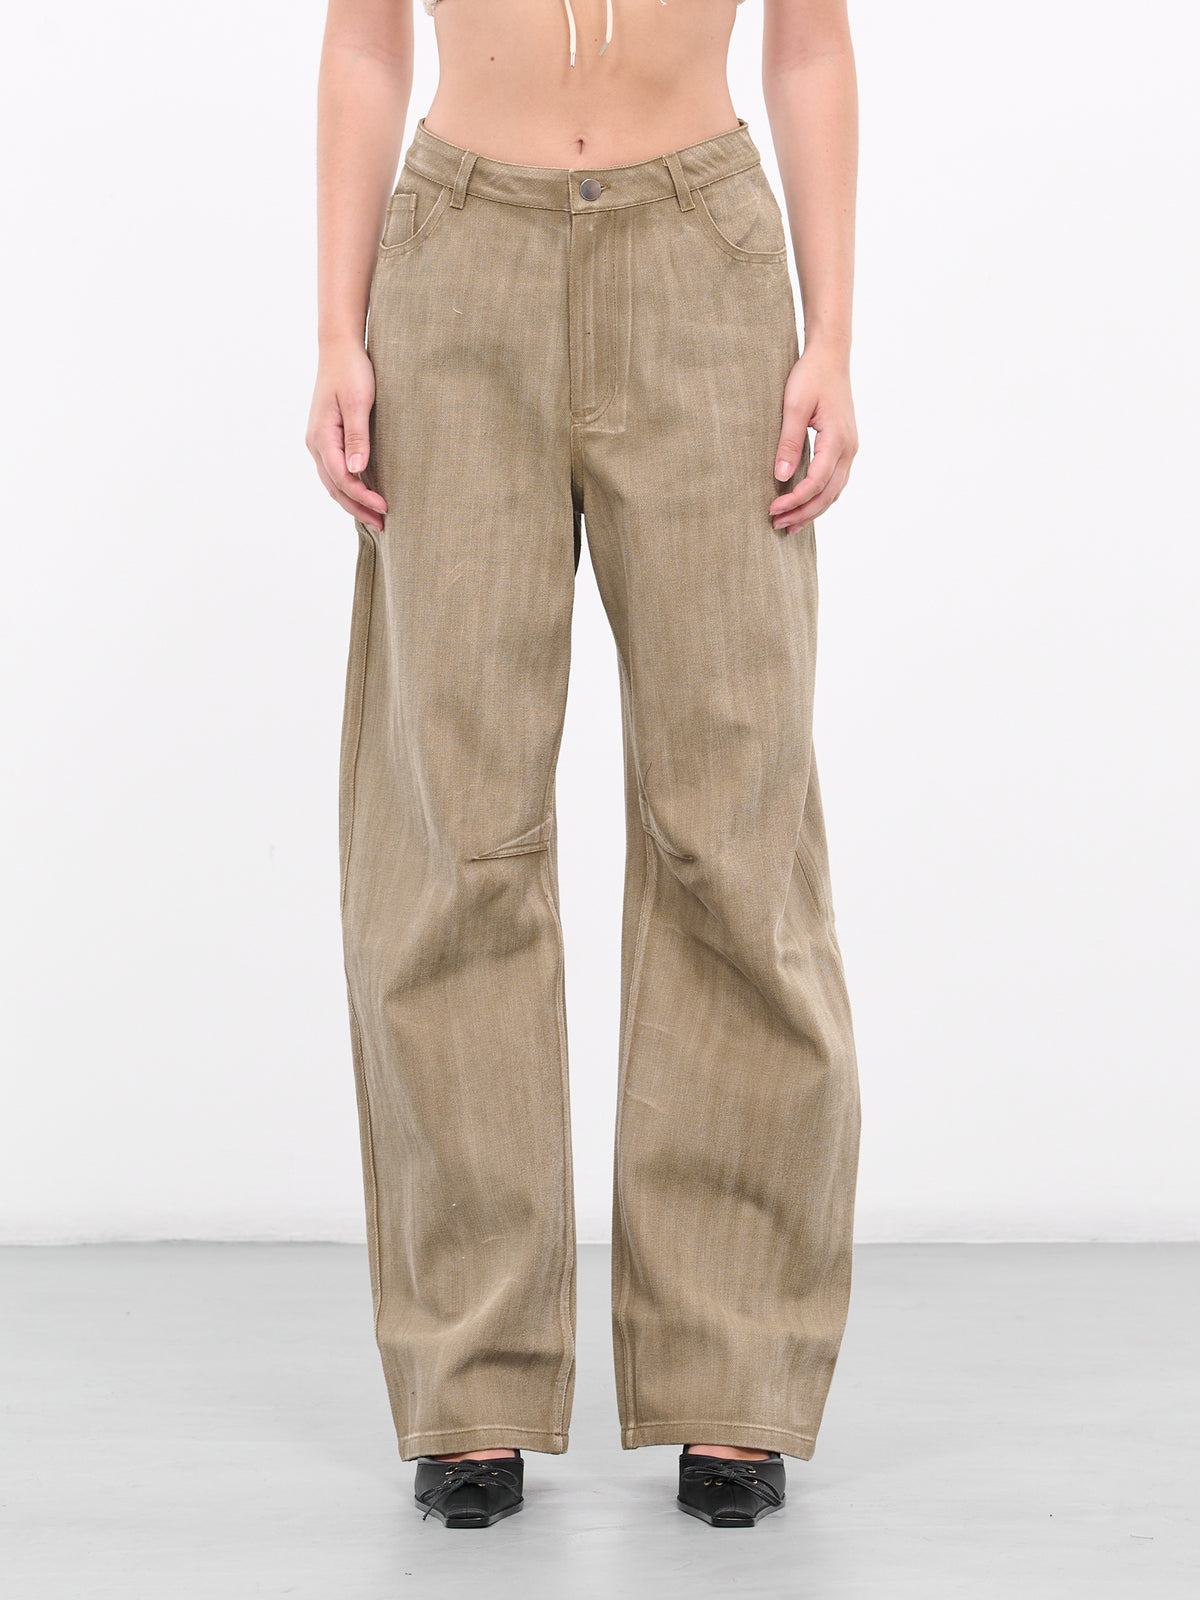 Denim Trousers (P003-MINERAL-BEIGE)